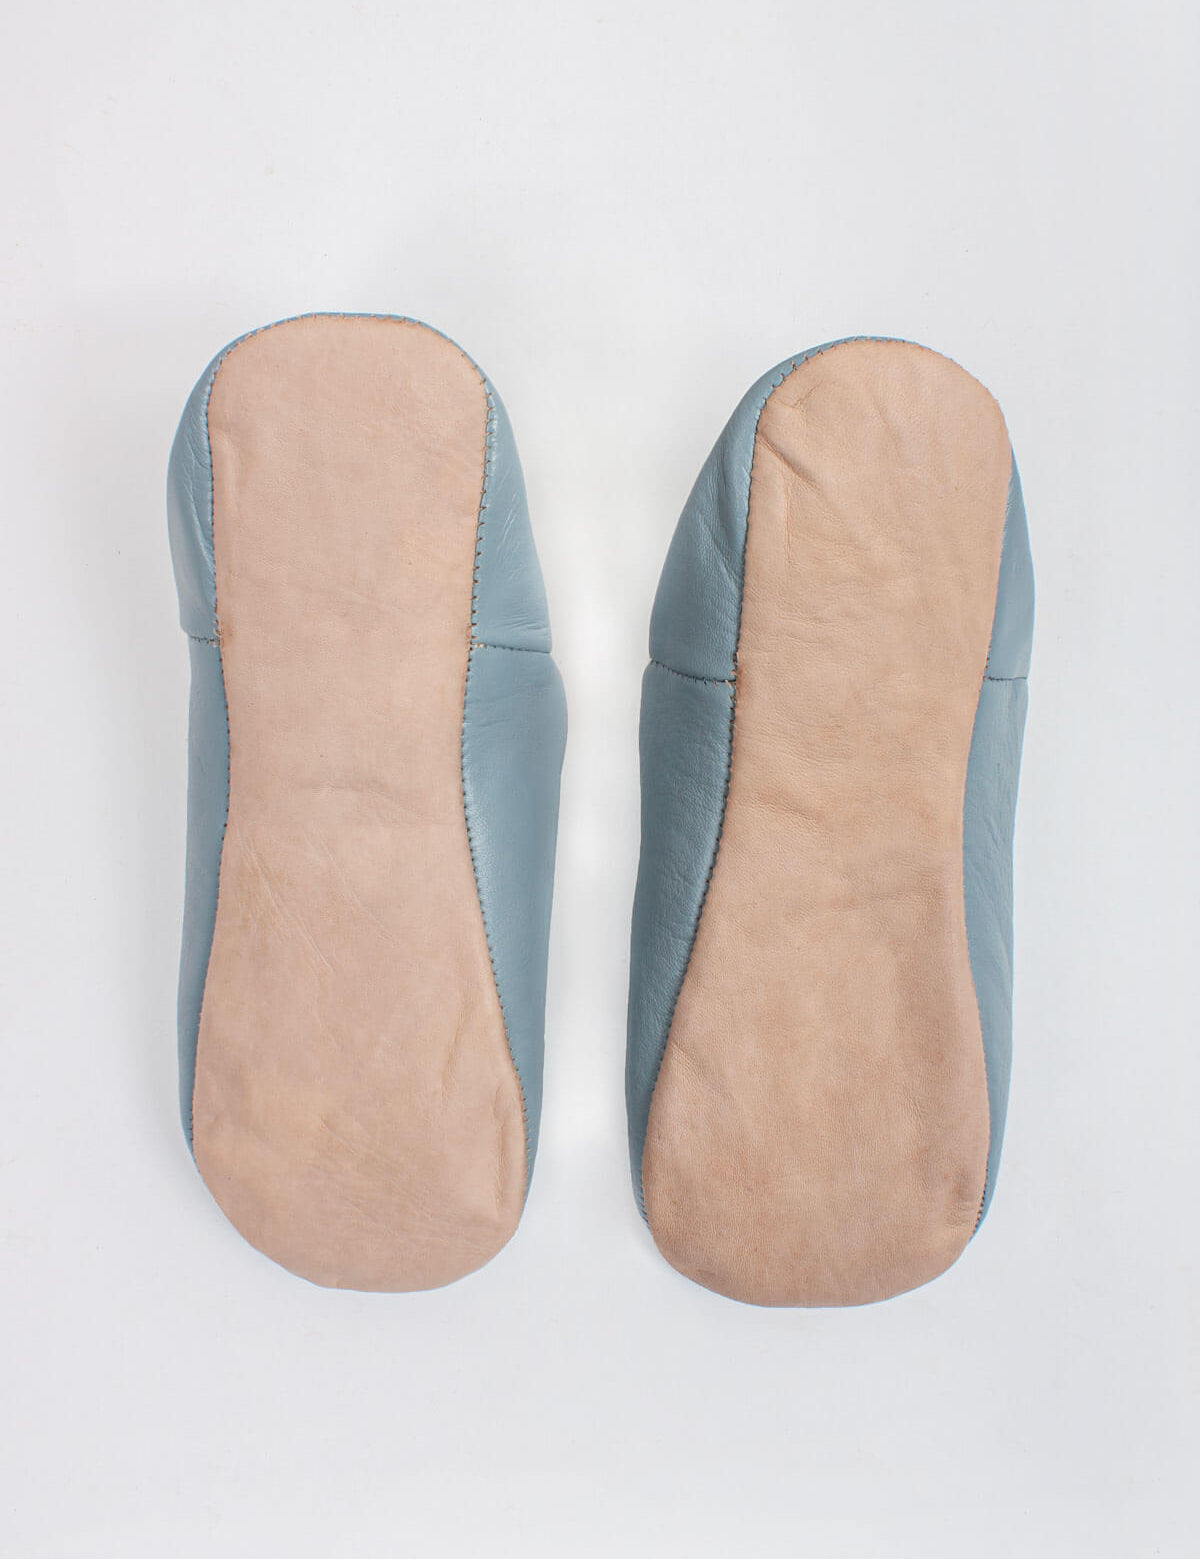 Bohemia-design-Moroccan-babouche-slippers-pearl-grey-leather-underside.jpg